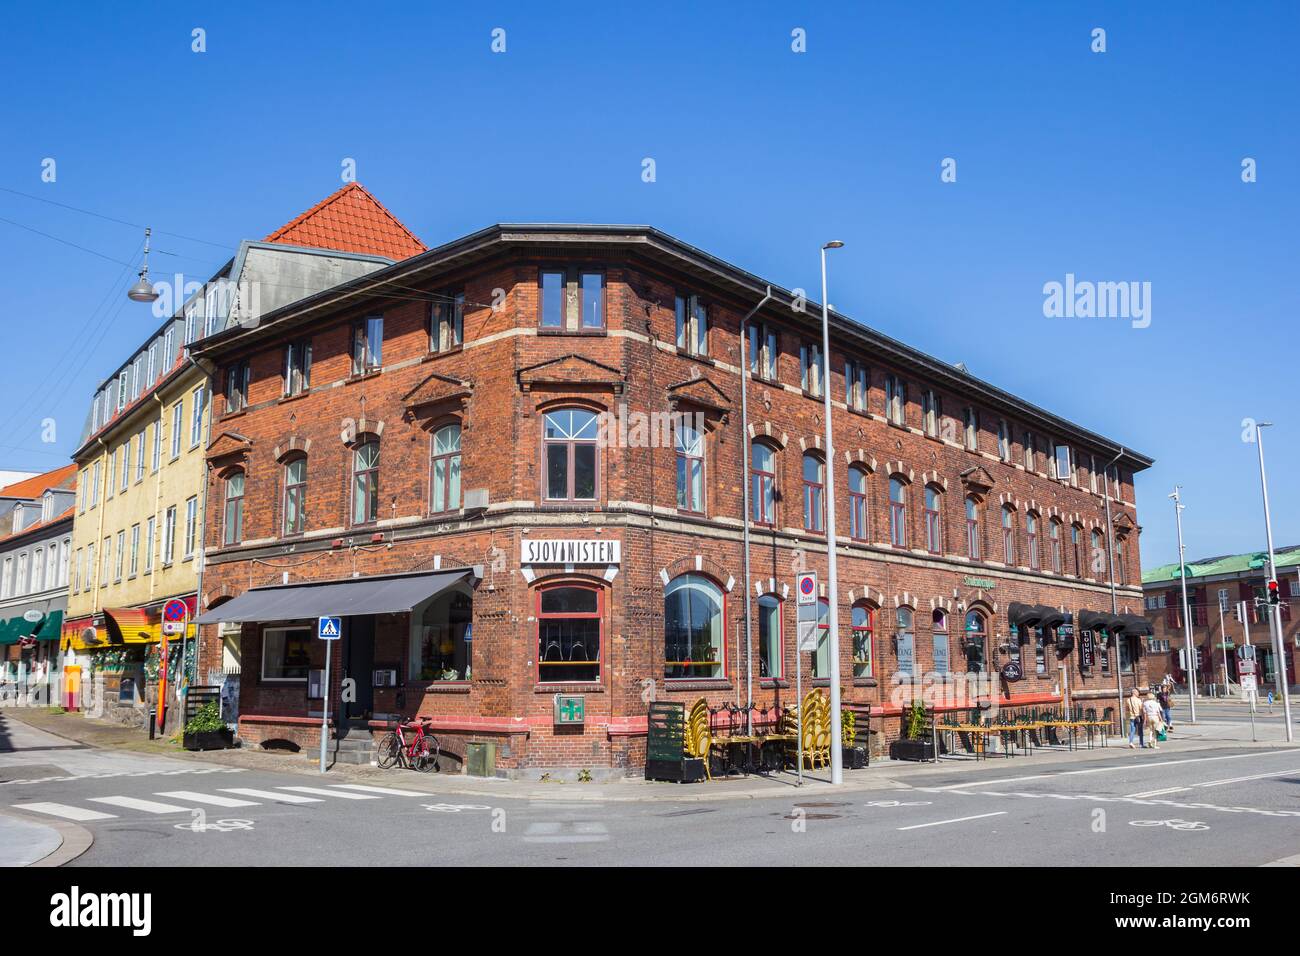 Historic building in the city center of Aarhus, Denmark Stock Photo